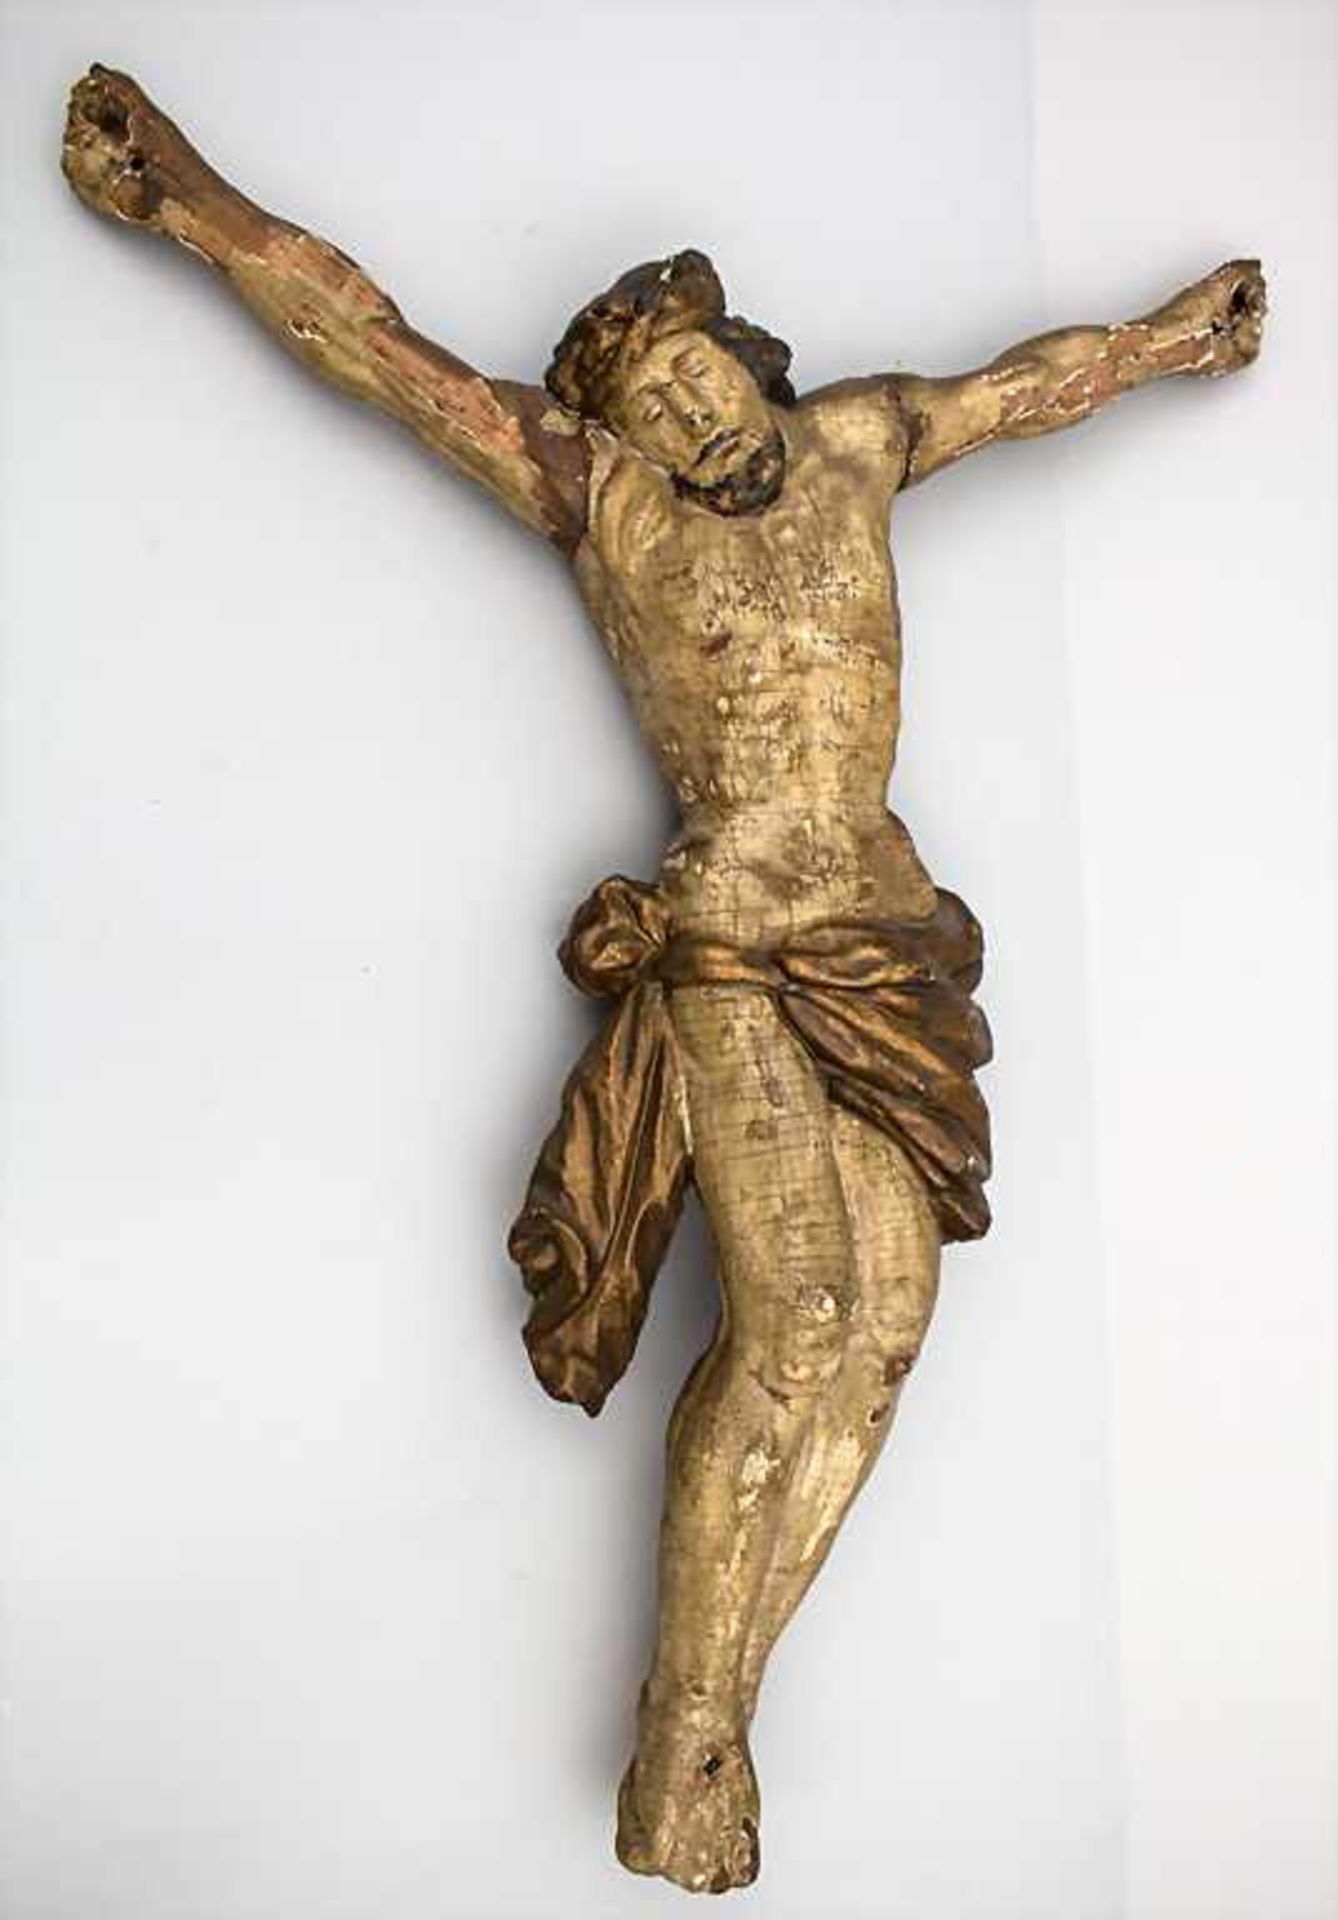 Holzskulptur 'Corpus Christi' / A wooden sculpture 'Corpus Christi'